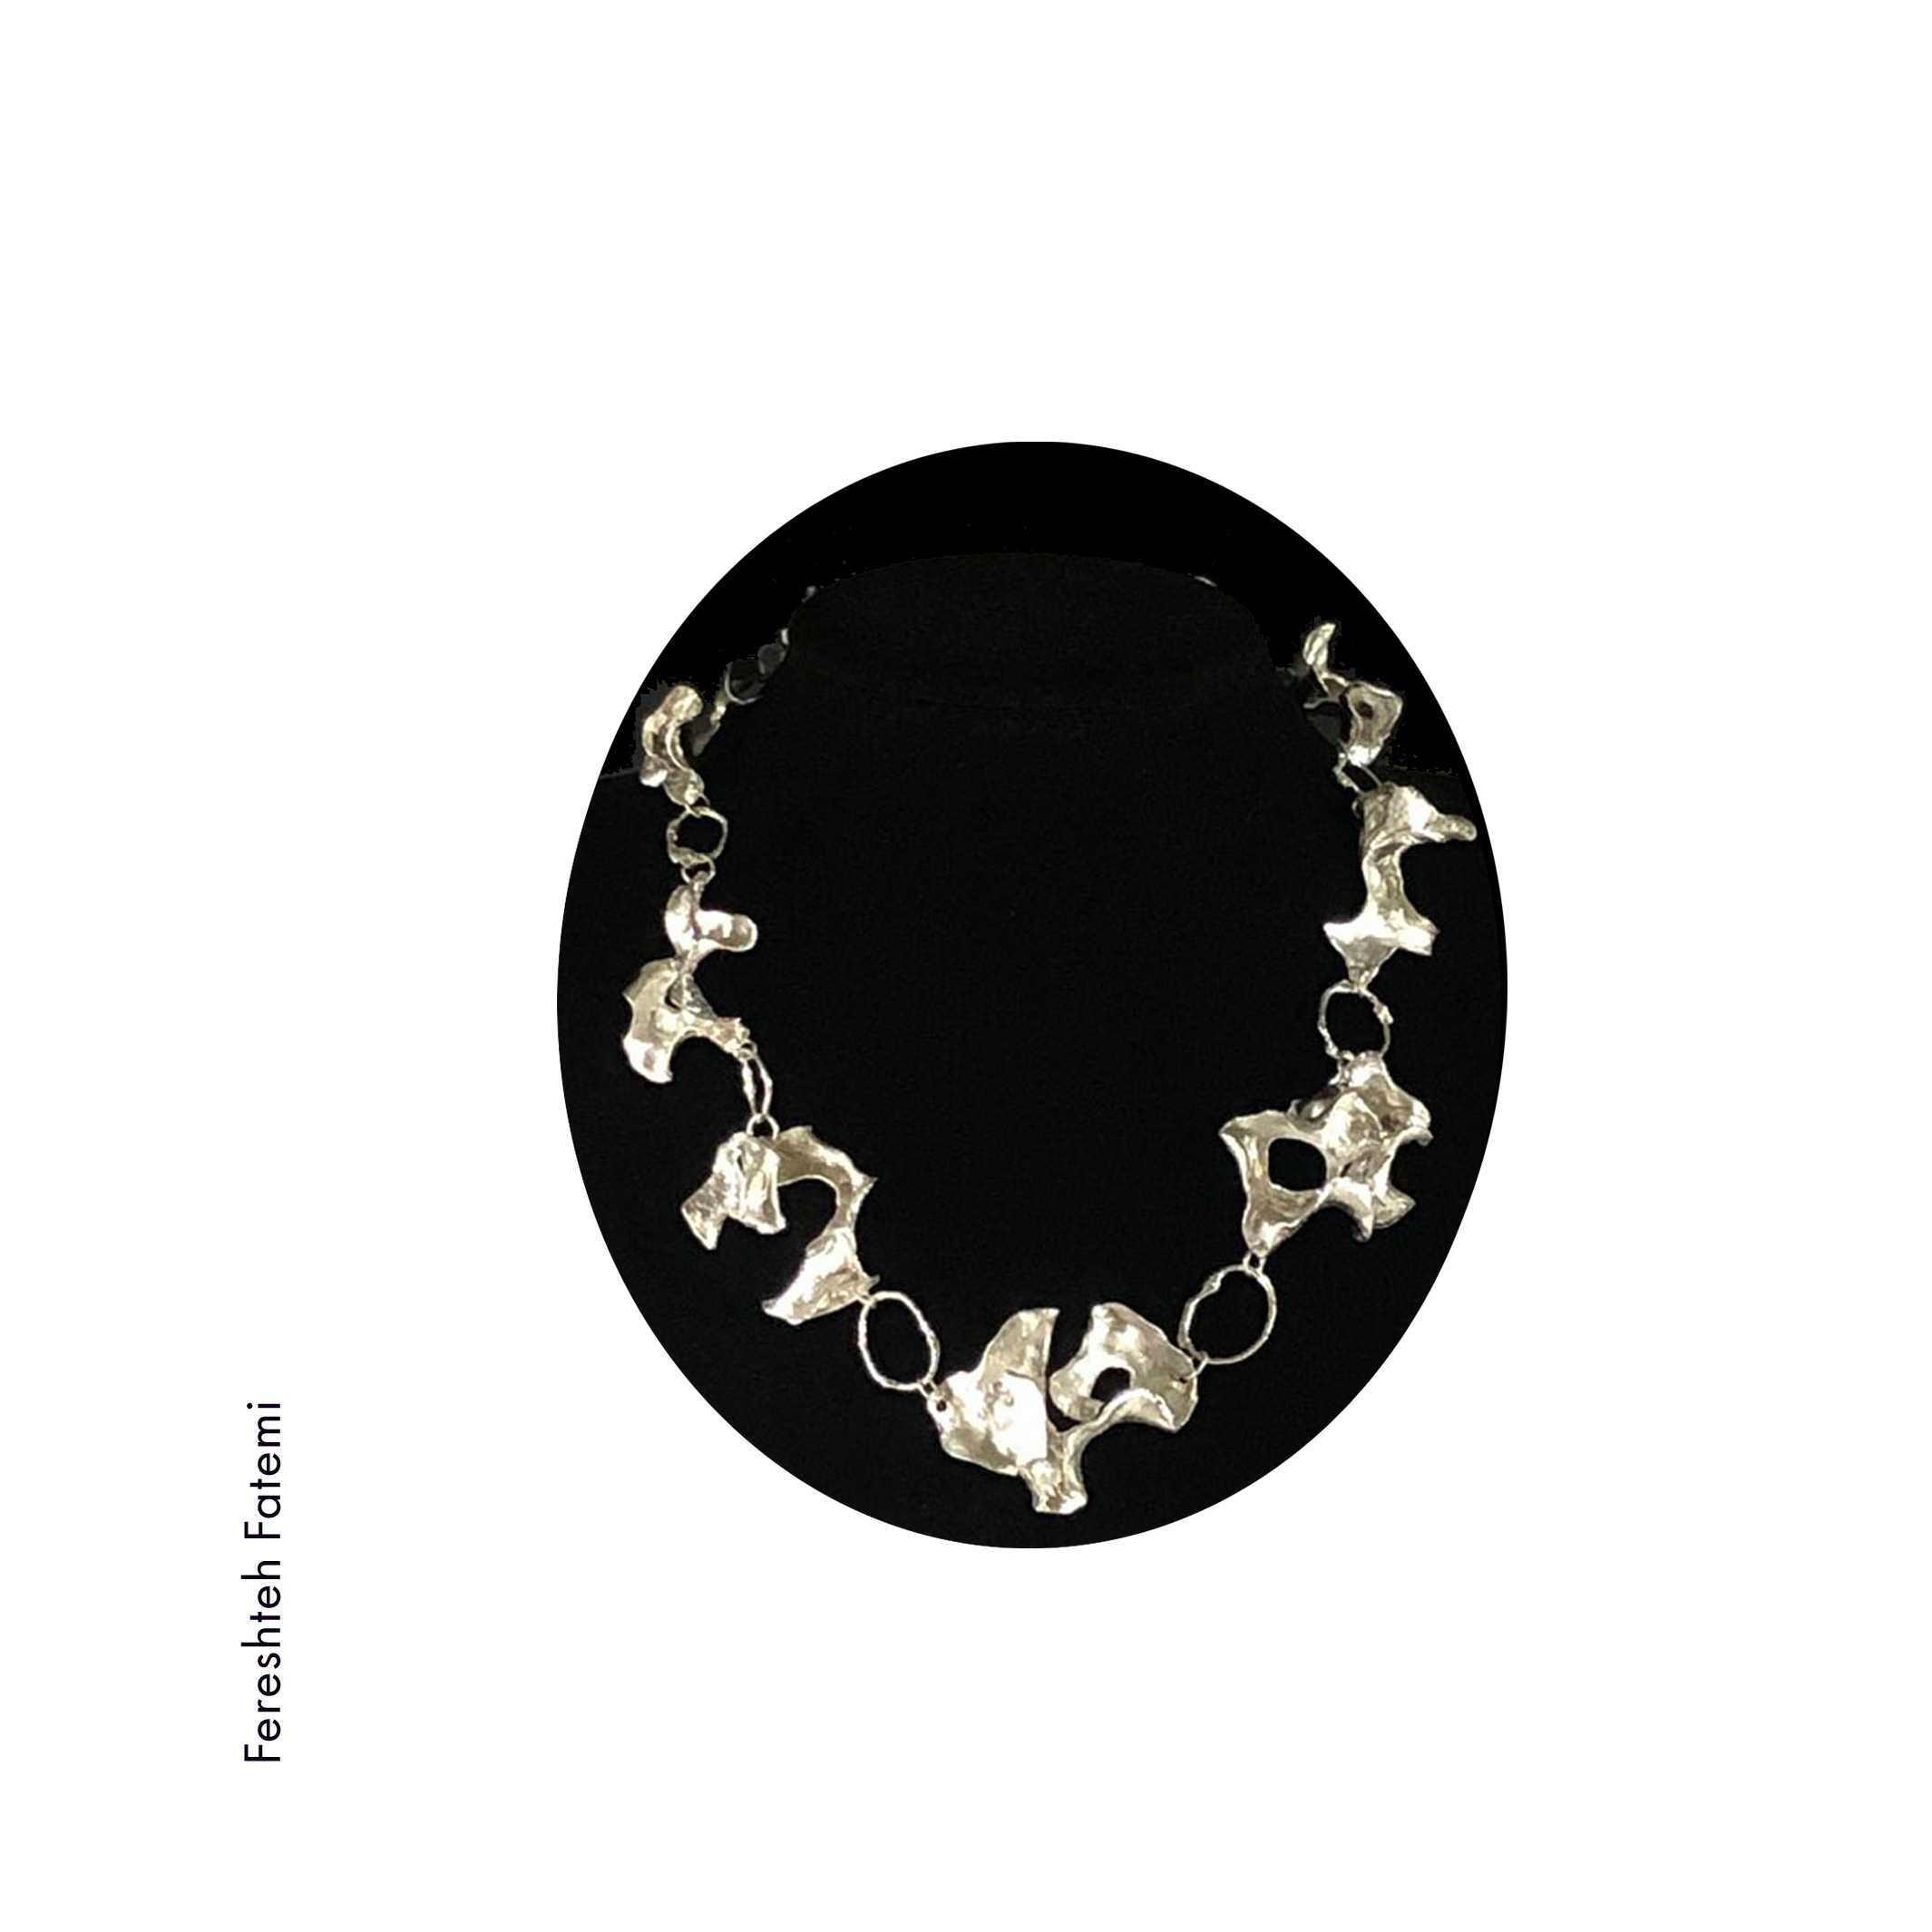 organic shaped sterling silver necklace on black velvet by Fereshteh Fatemi